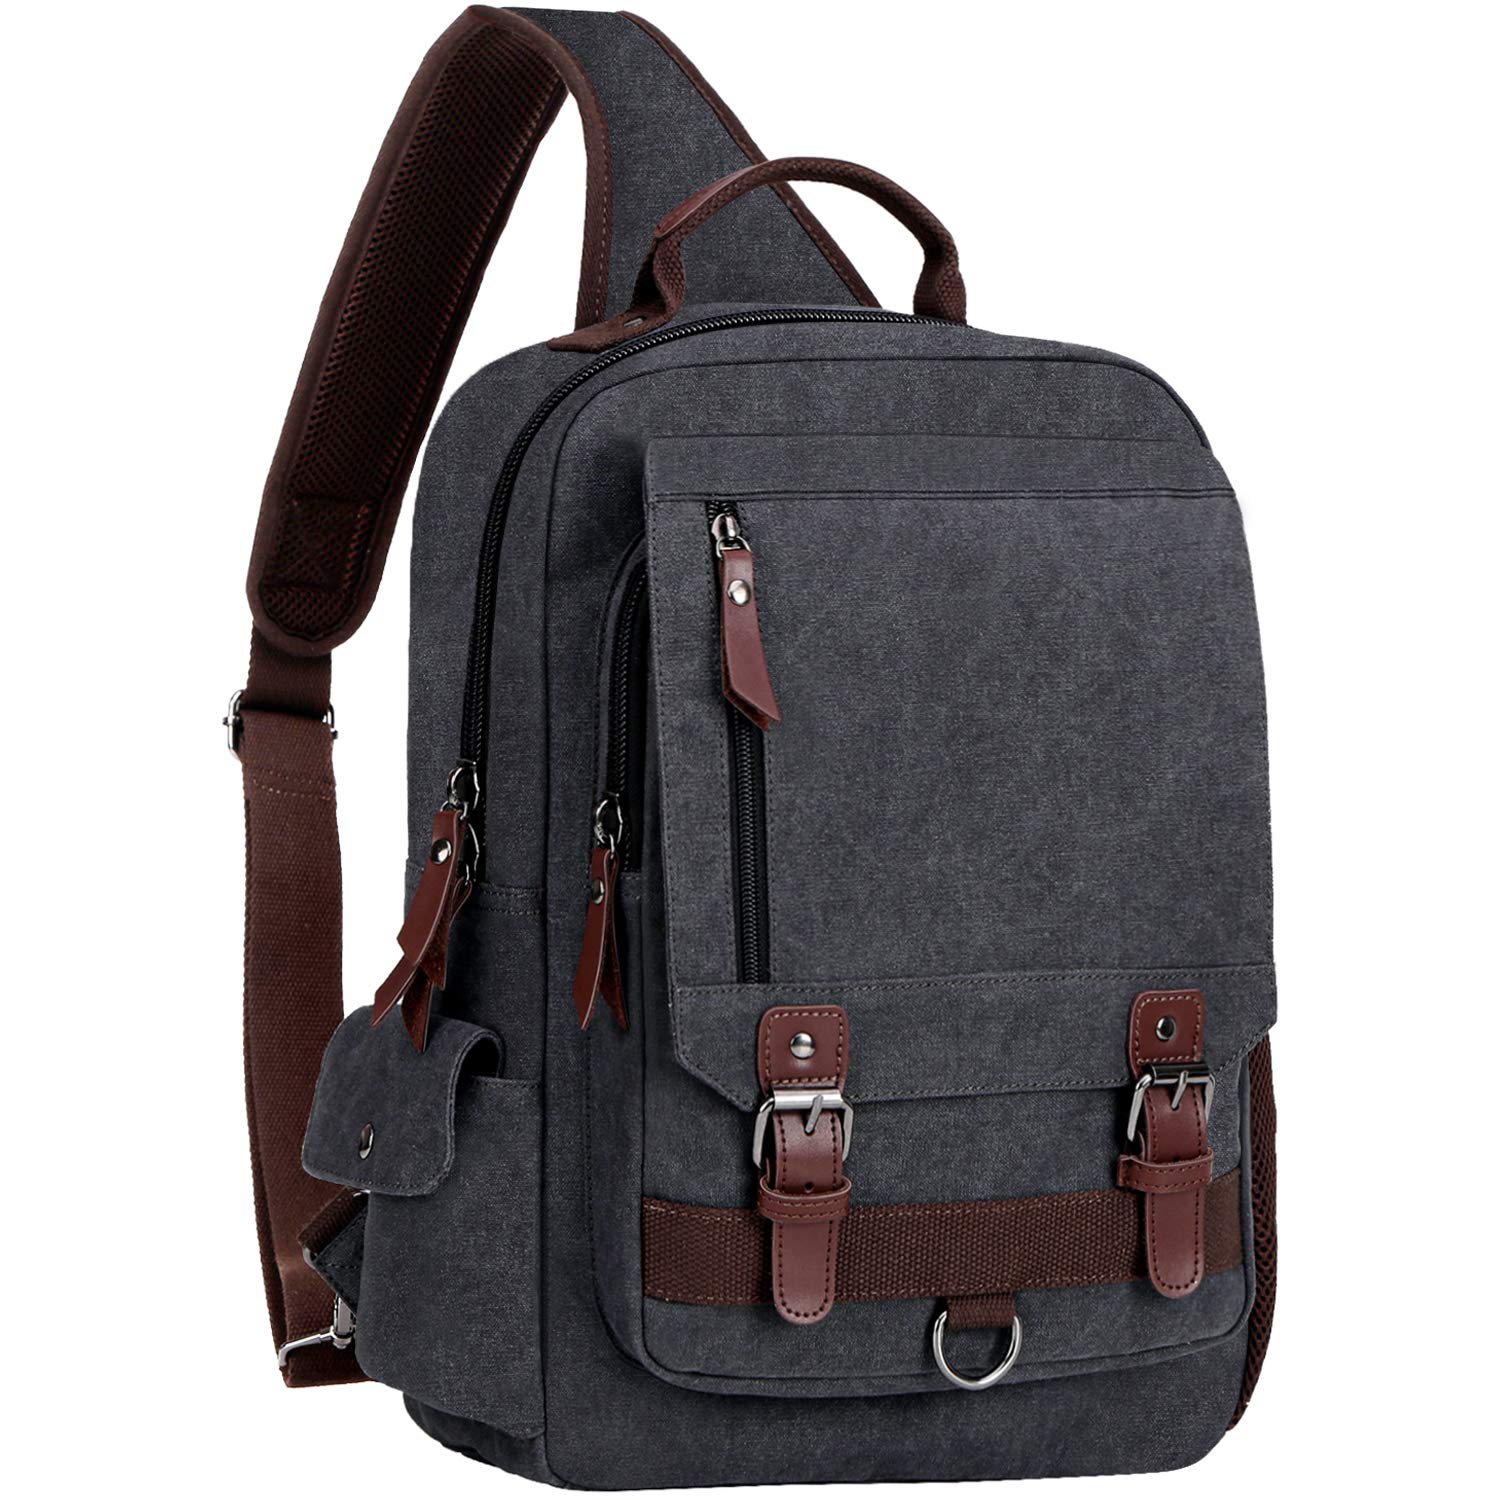 Leather Convertible Backpack - Unisex Everyday Bag | OWAÏ – Eiken